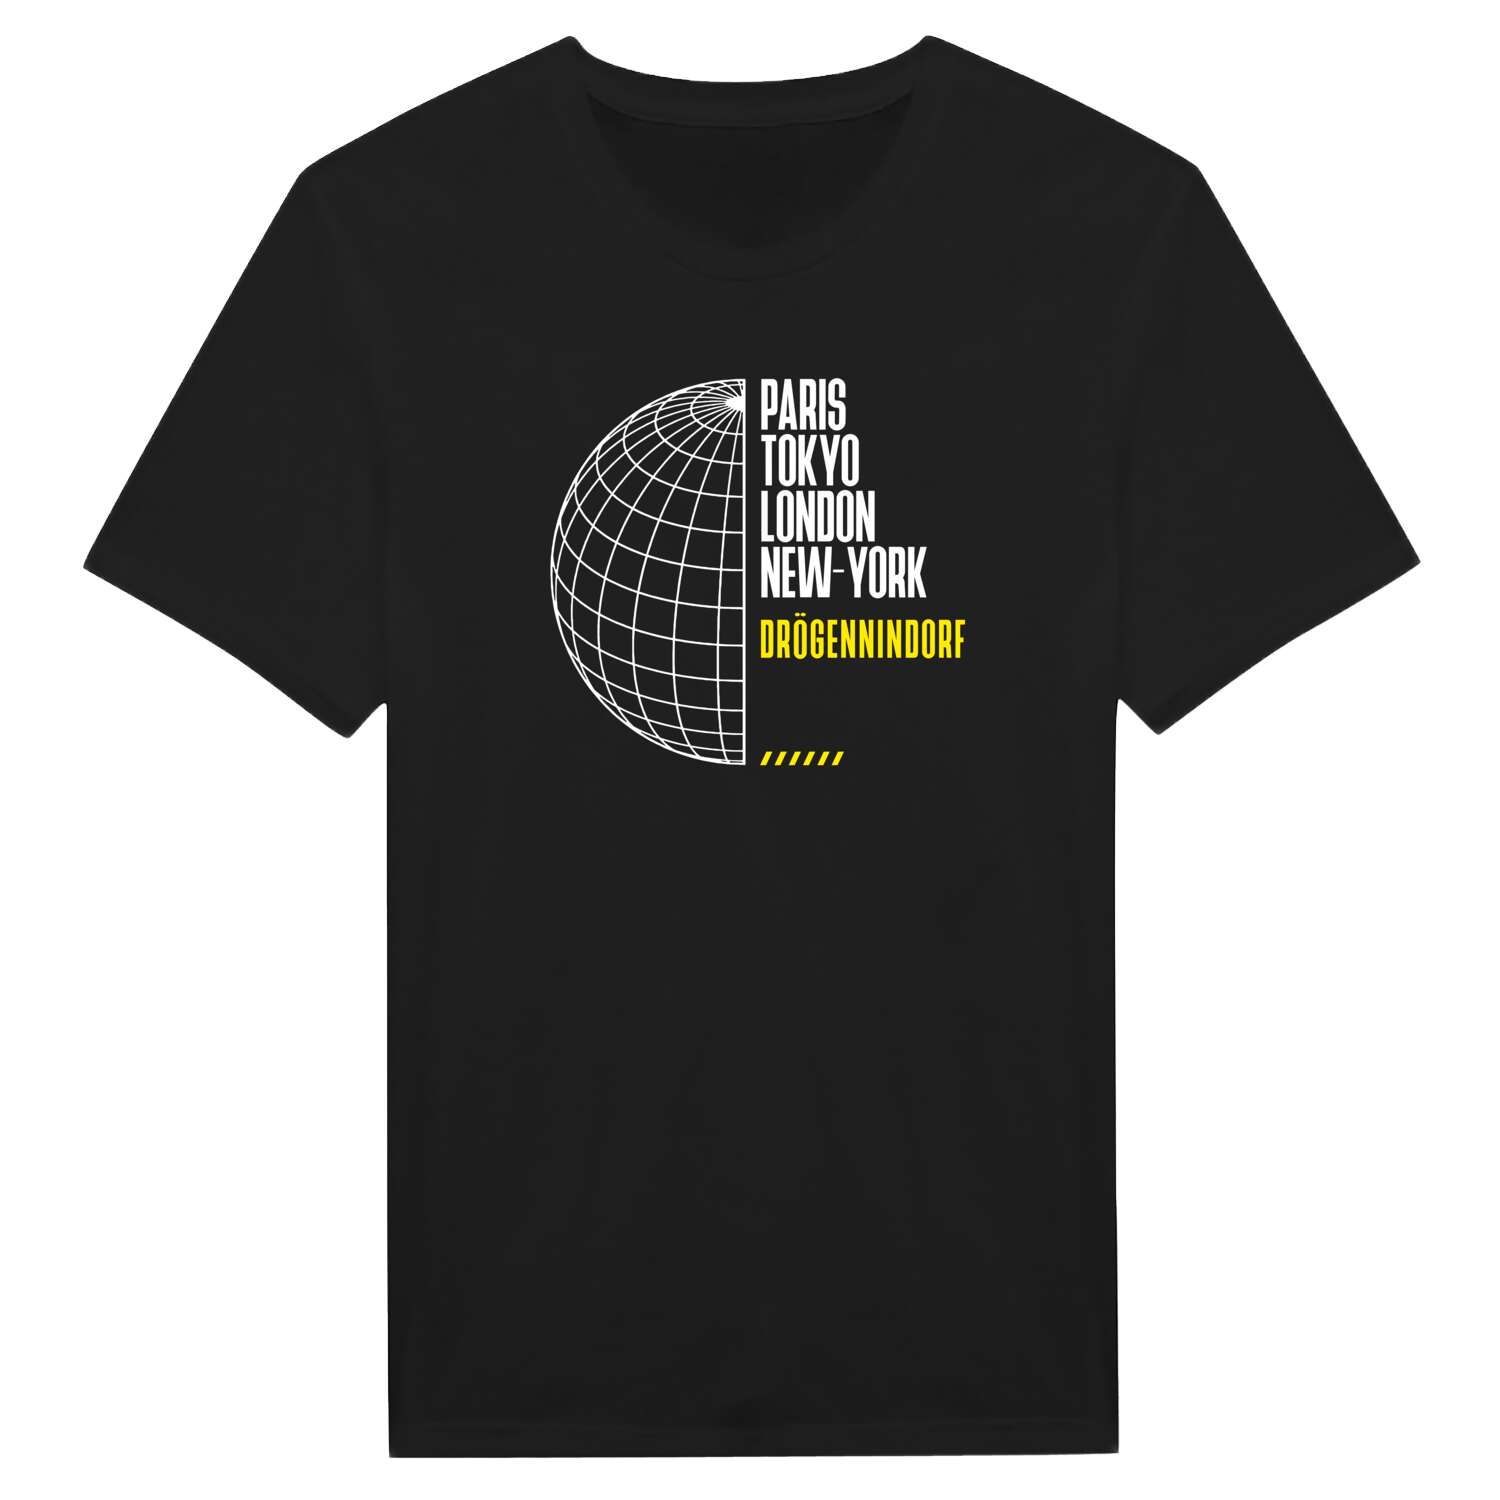 Drögennindorf T-Shirt »Paris Tokyo London«